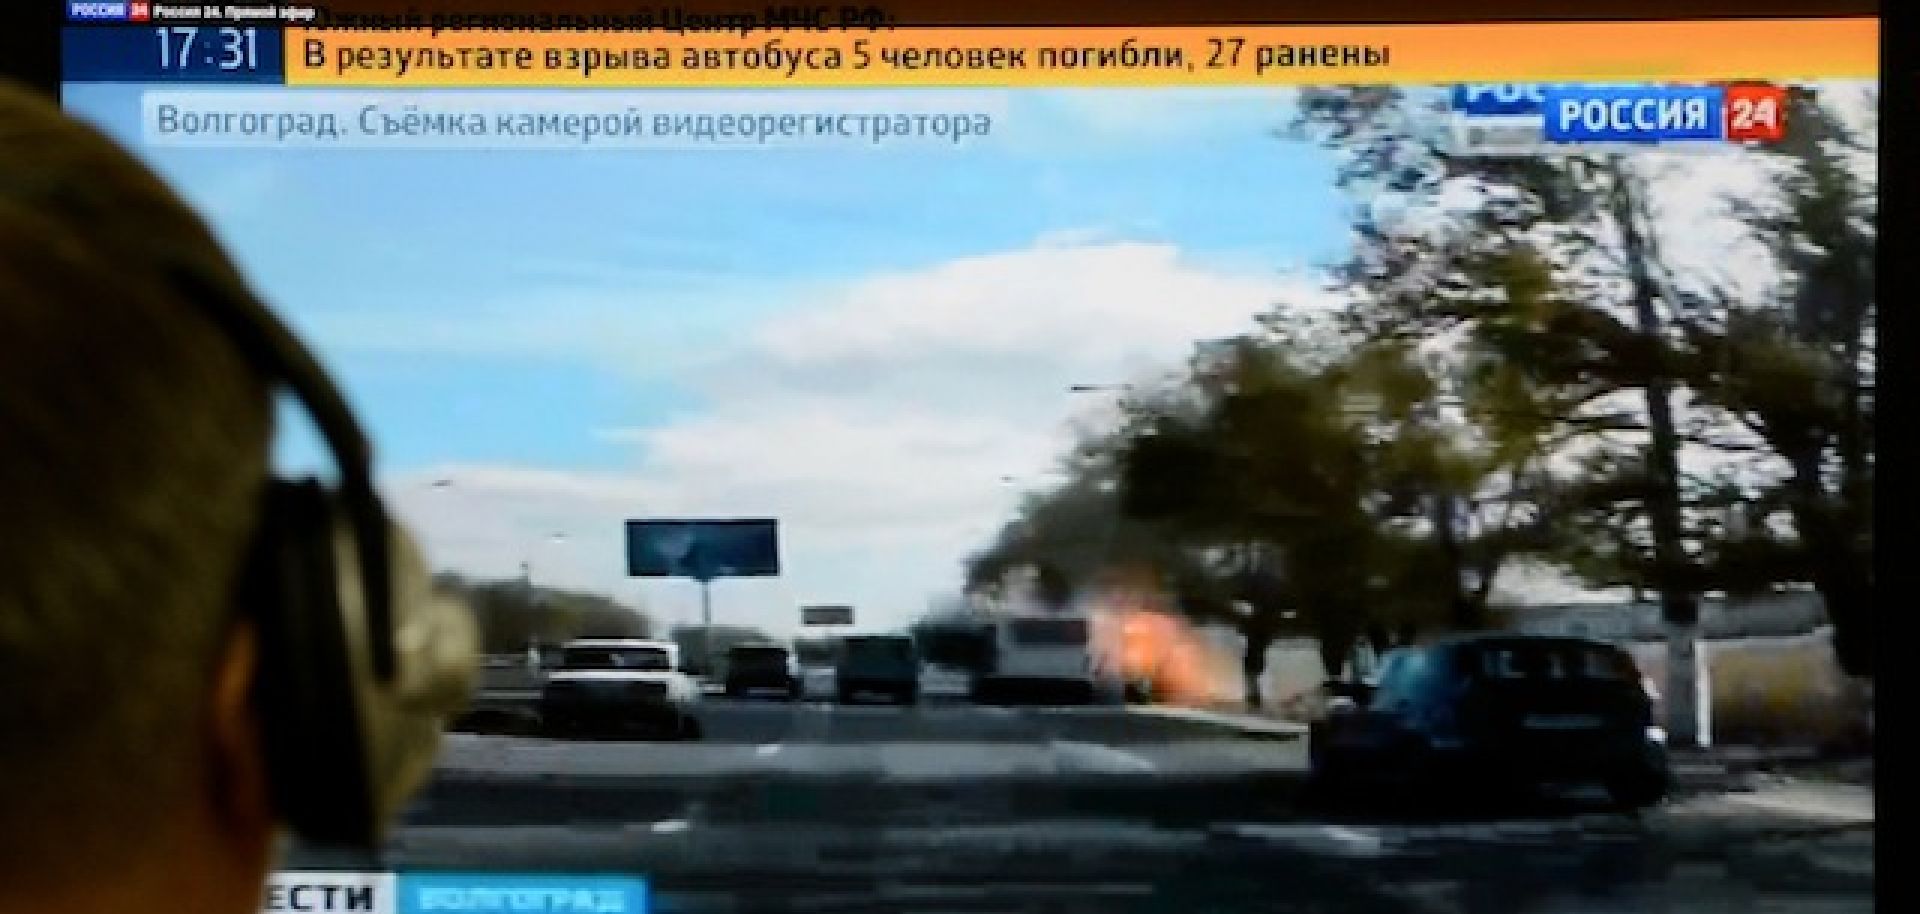 Russia: Terror Suspected in Volgograd Bombing